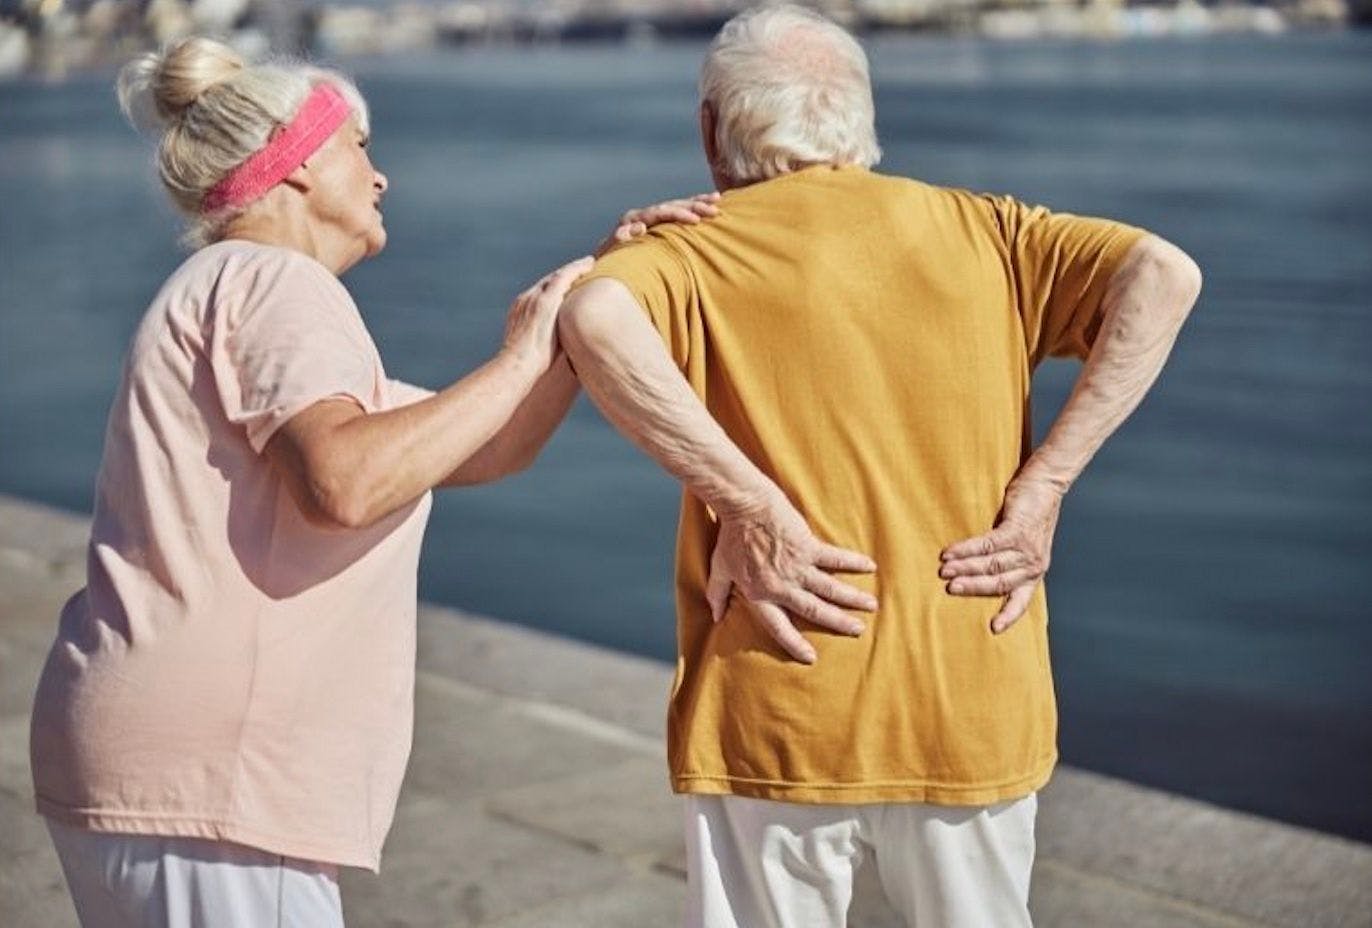 shingles nerve ending pain in elderly patient